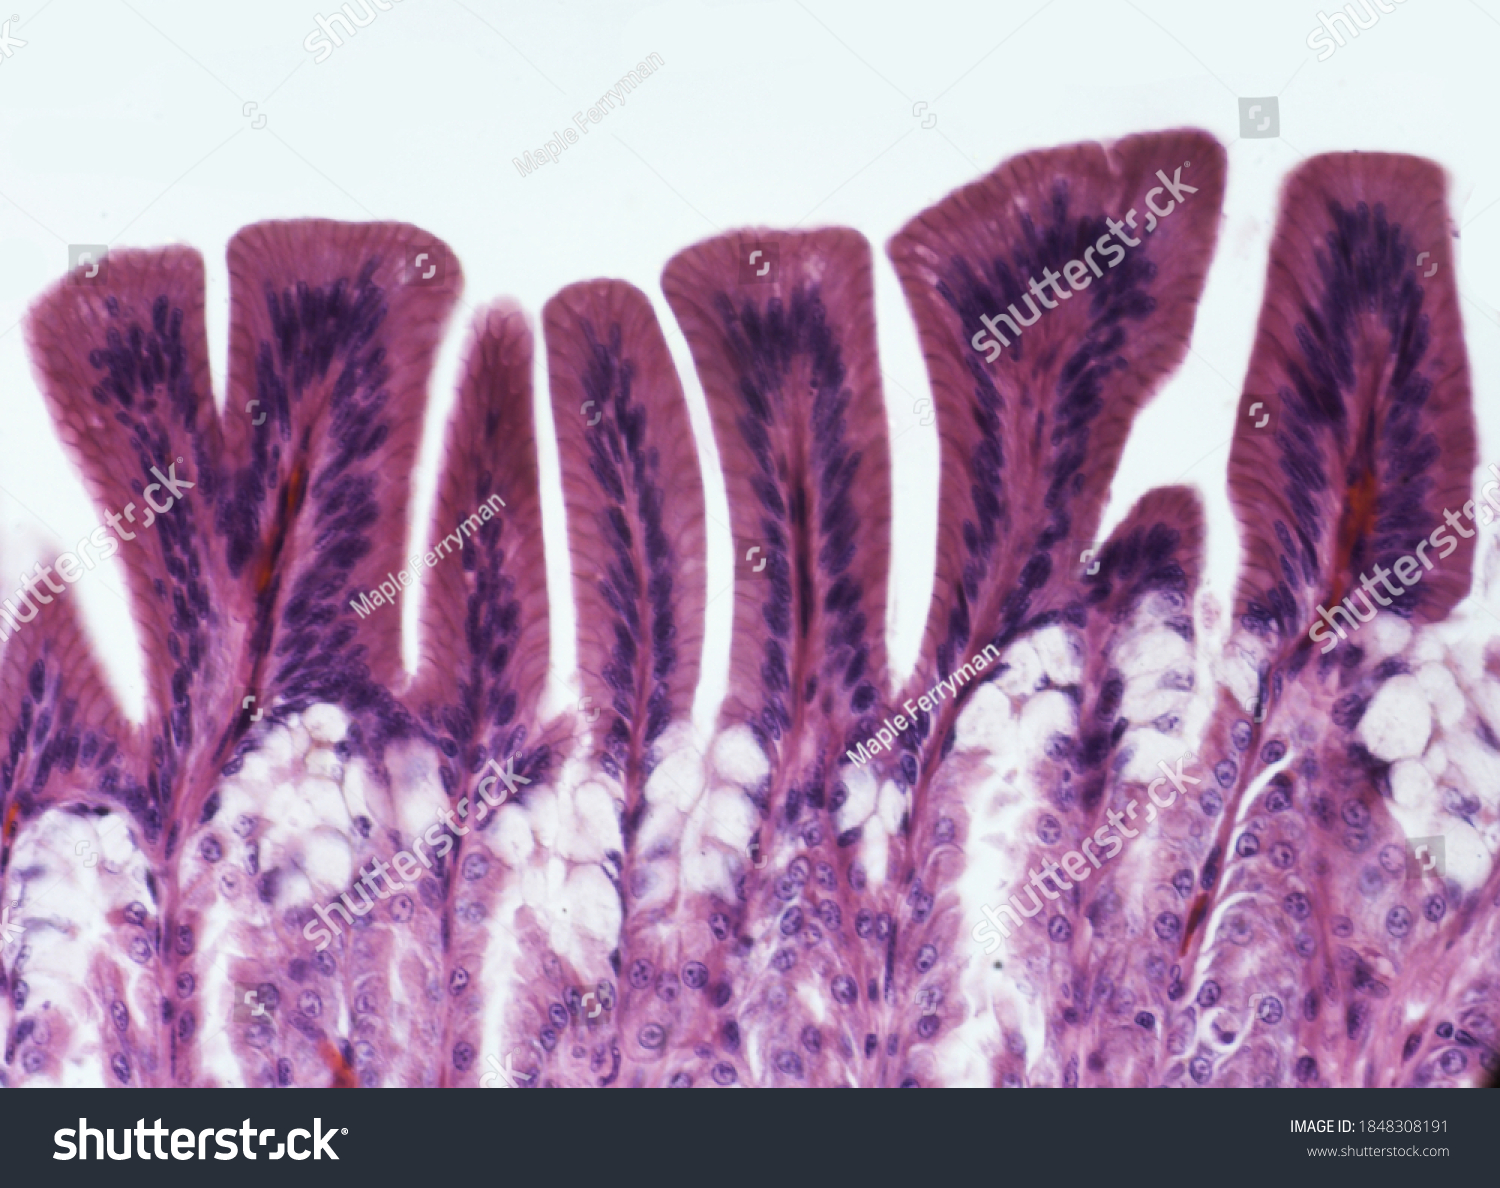 5,369 Intestine microscope Images, Stock Photos & Vectors | Shutterstock